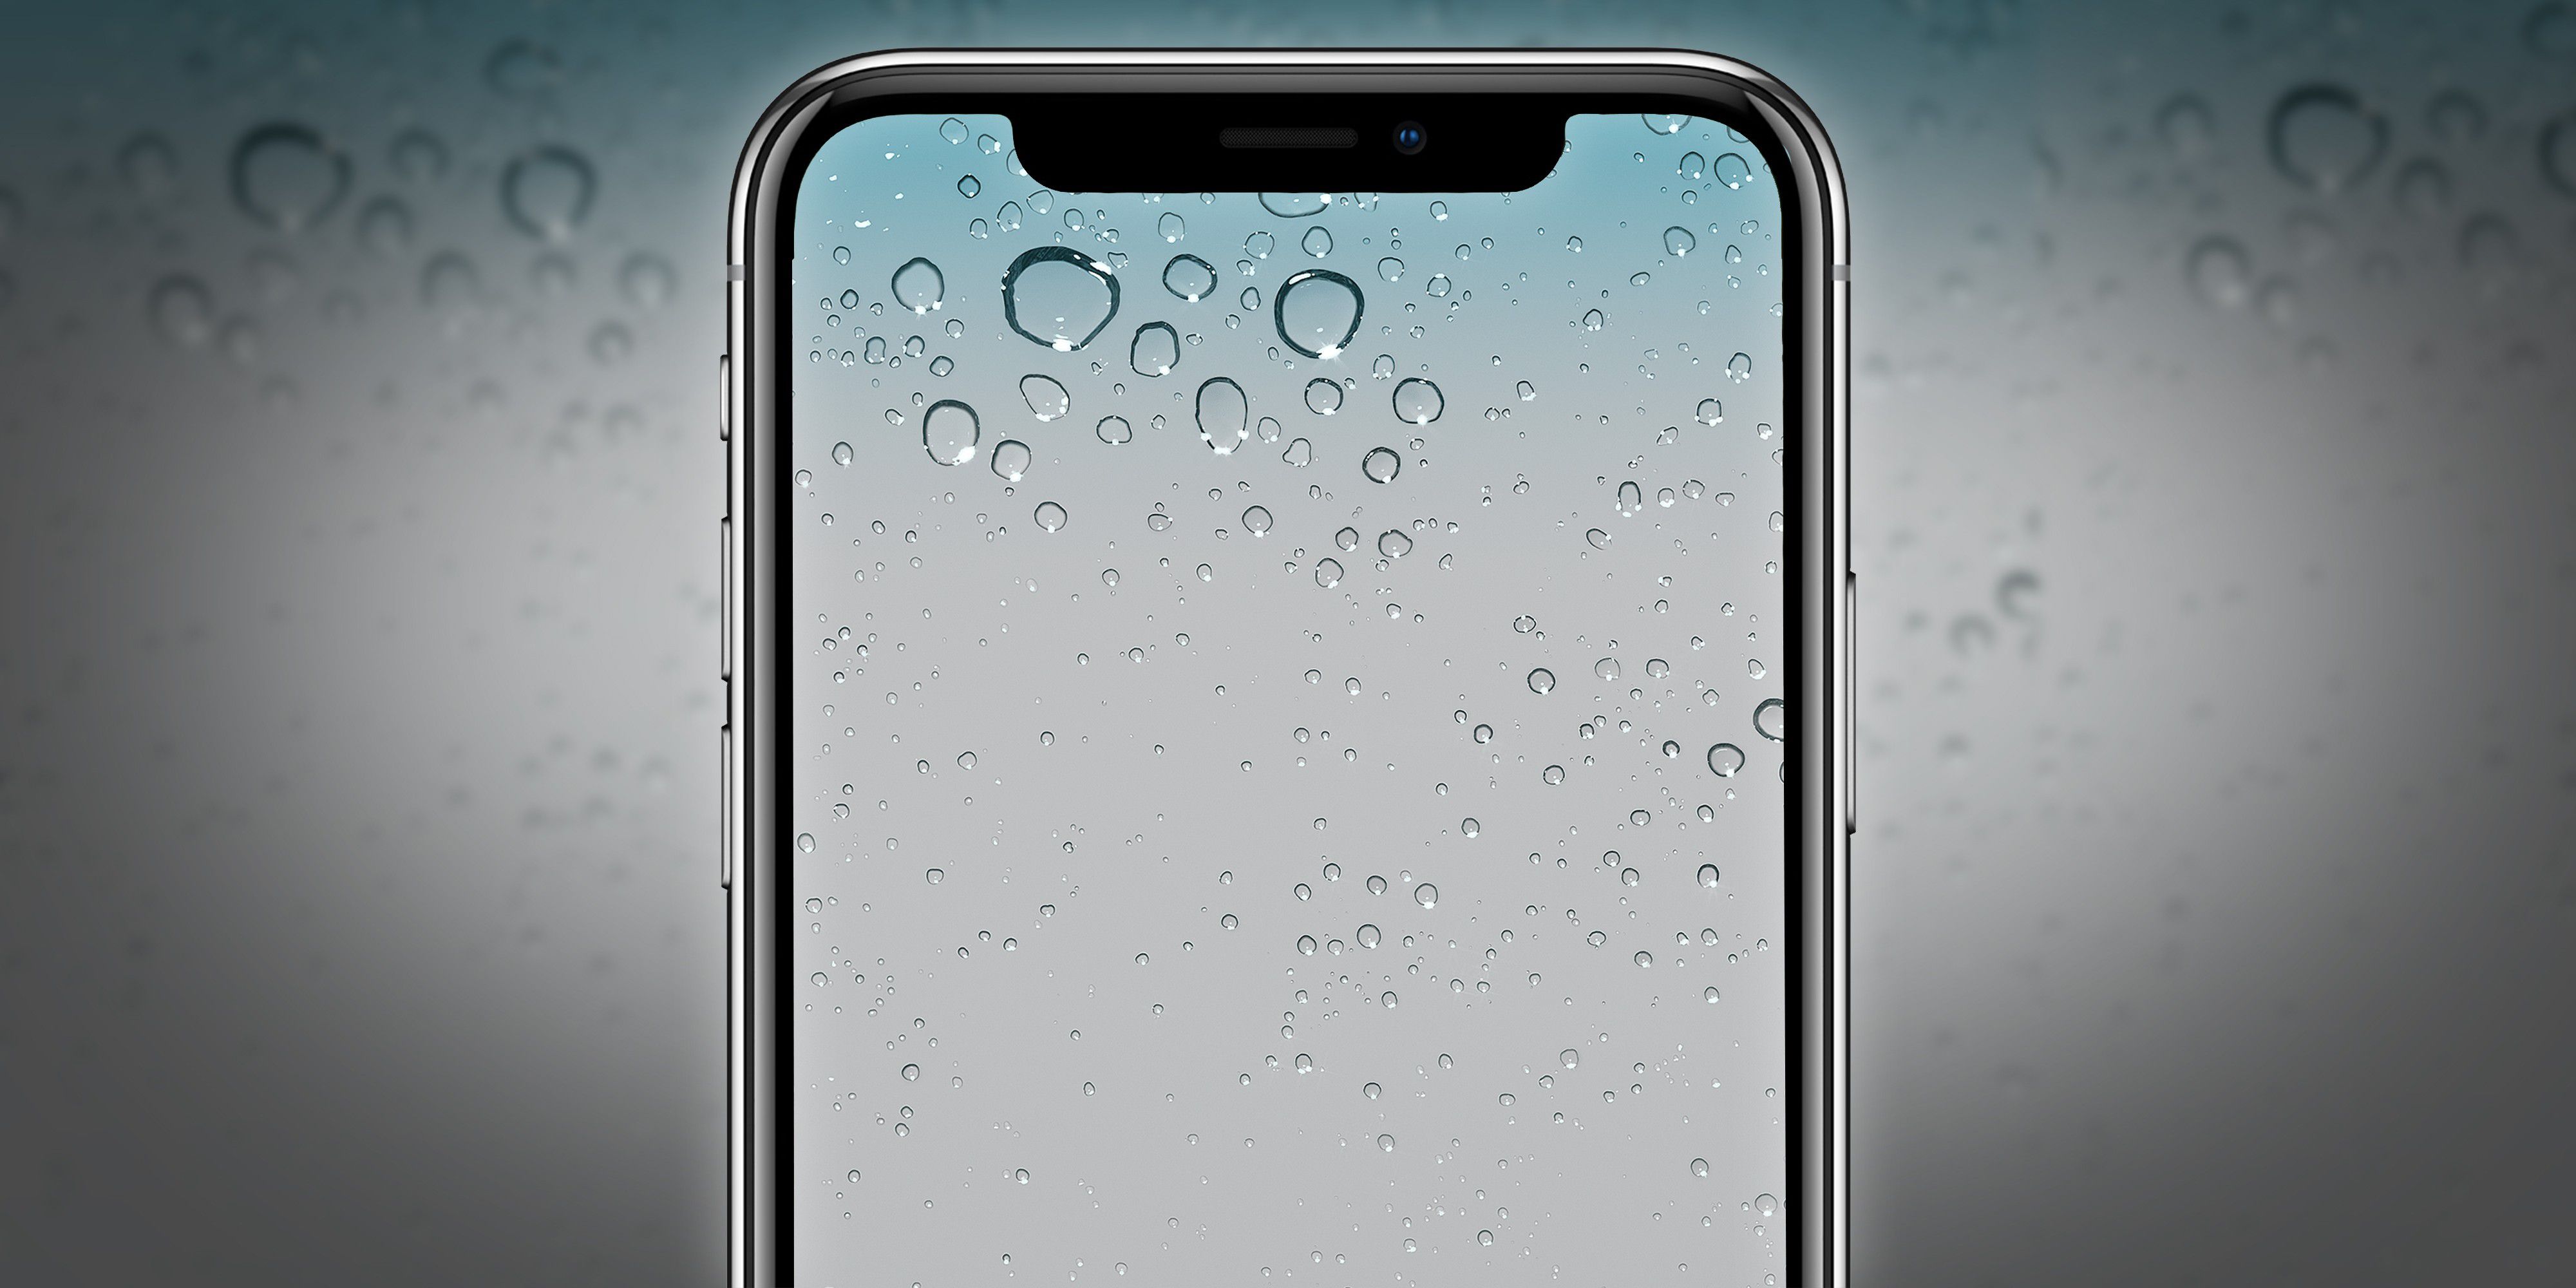 Alte Ios Hintergrundbilder Fur Iphone X Optimiert Macwelt